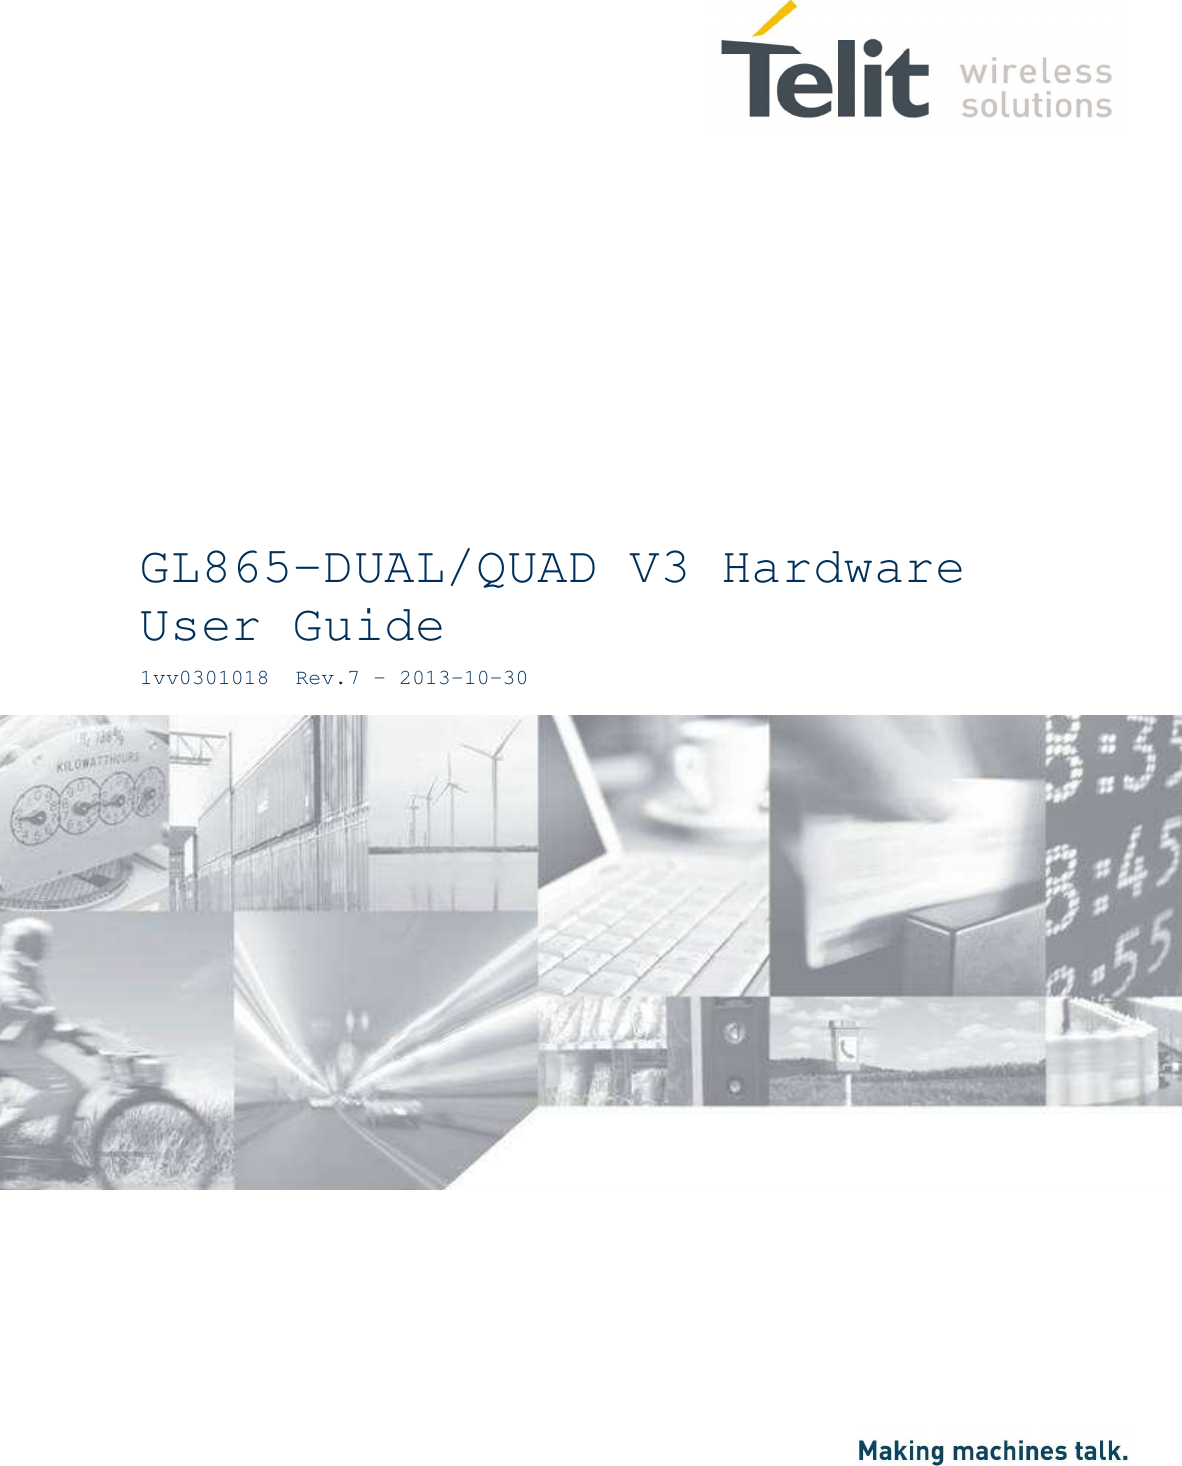                     GL865-DUAL/QUAD V3 Hardware User Guide 1vv0301018  Rev.7 – 2013-10-30    